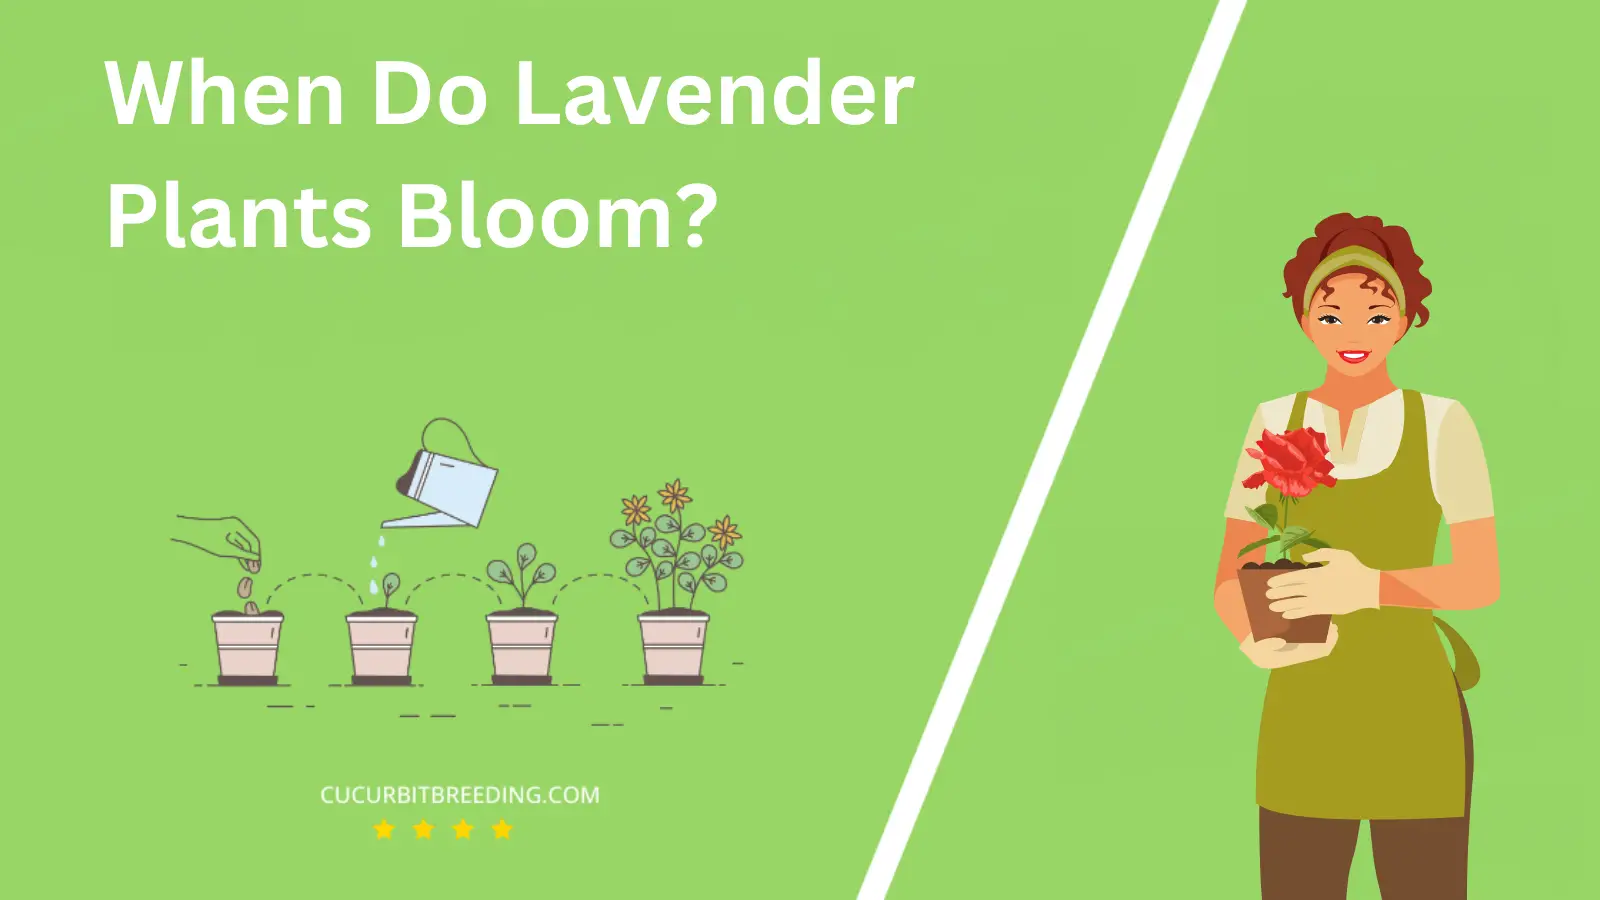 When Do Lavender Plants Bloom?